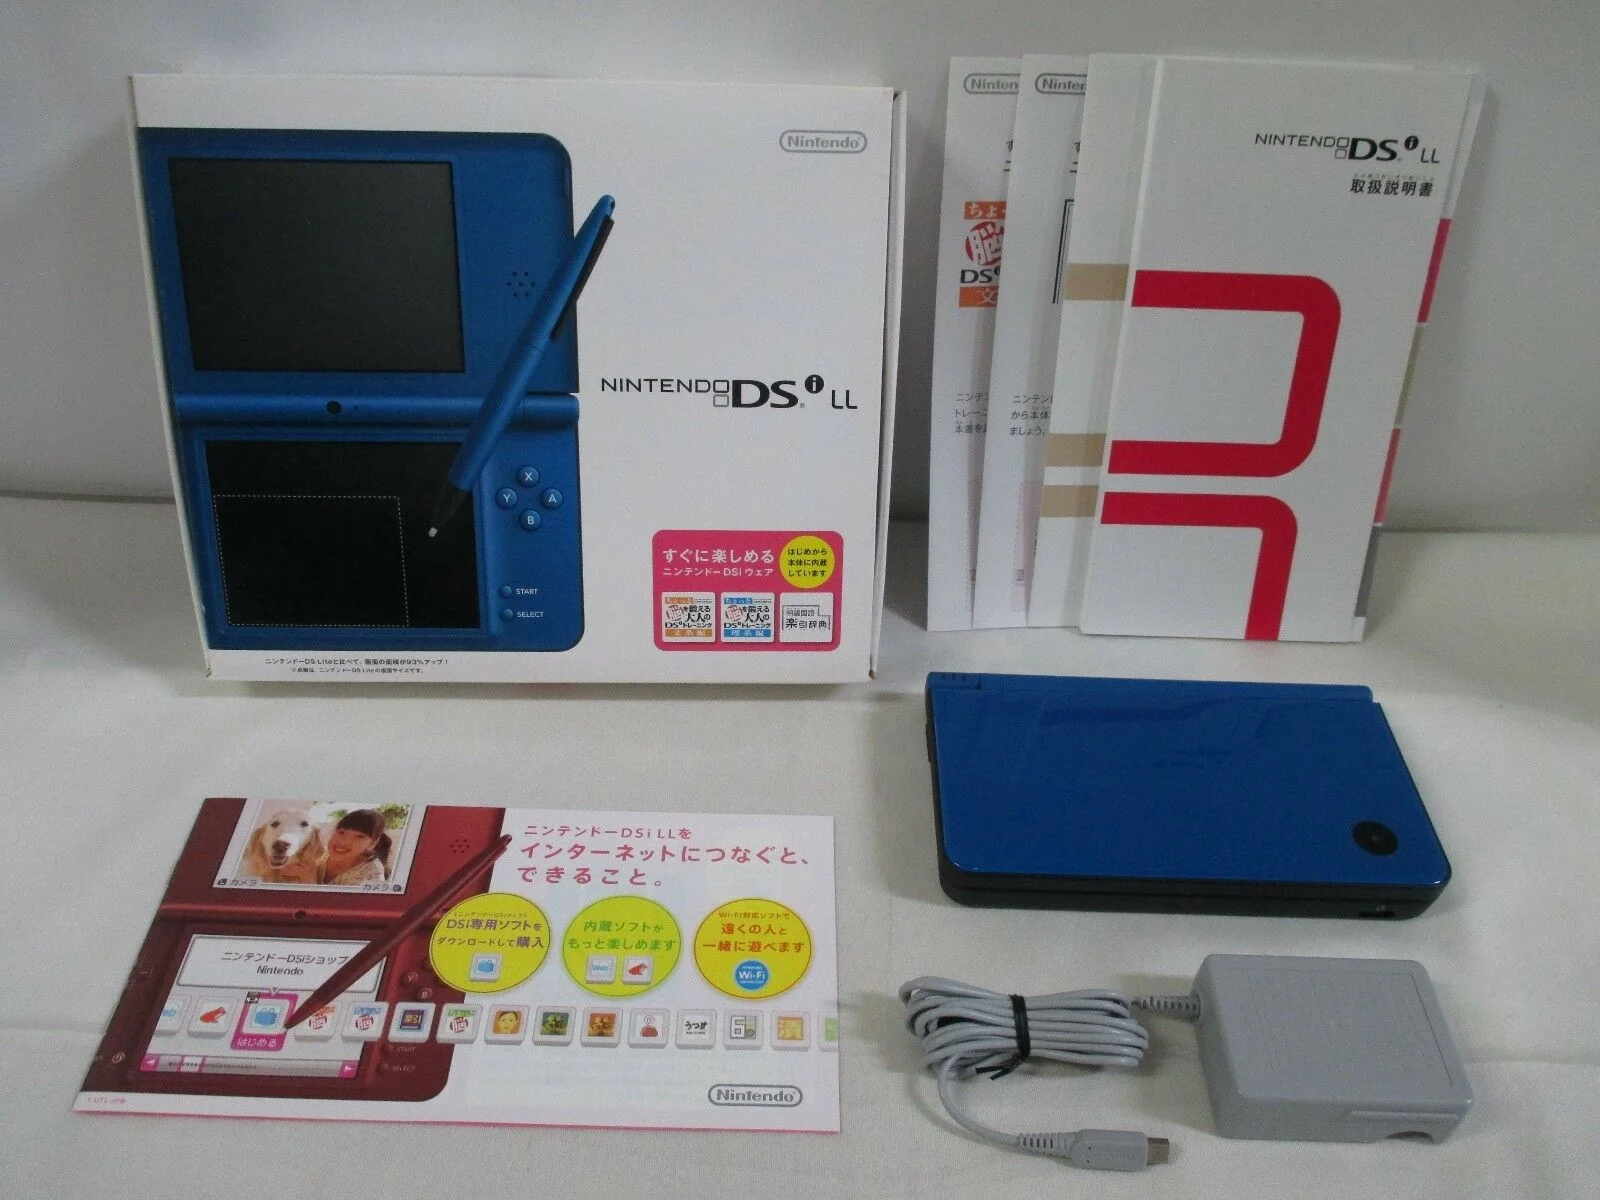  Nintendo DSi XL Midnight Blue Console [JP]